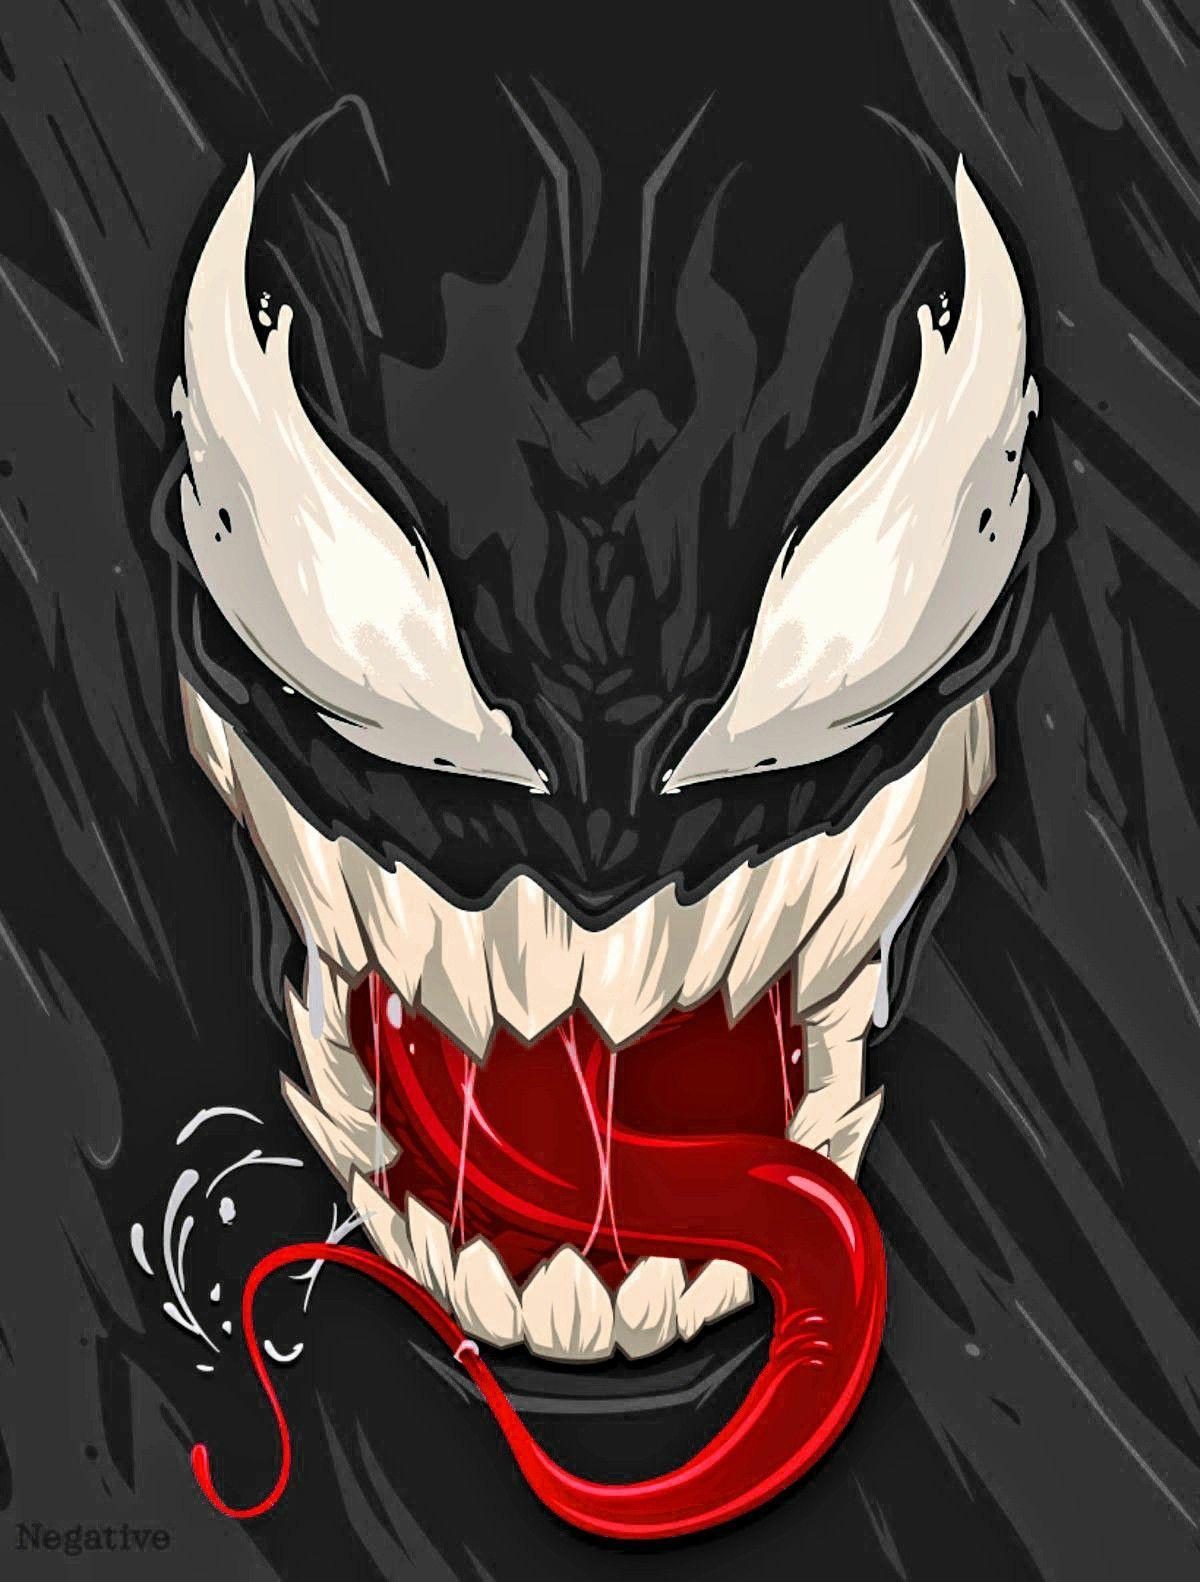 Venom and Joker Wallpapers - Top Free Venom and Joker Backgrounds ...